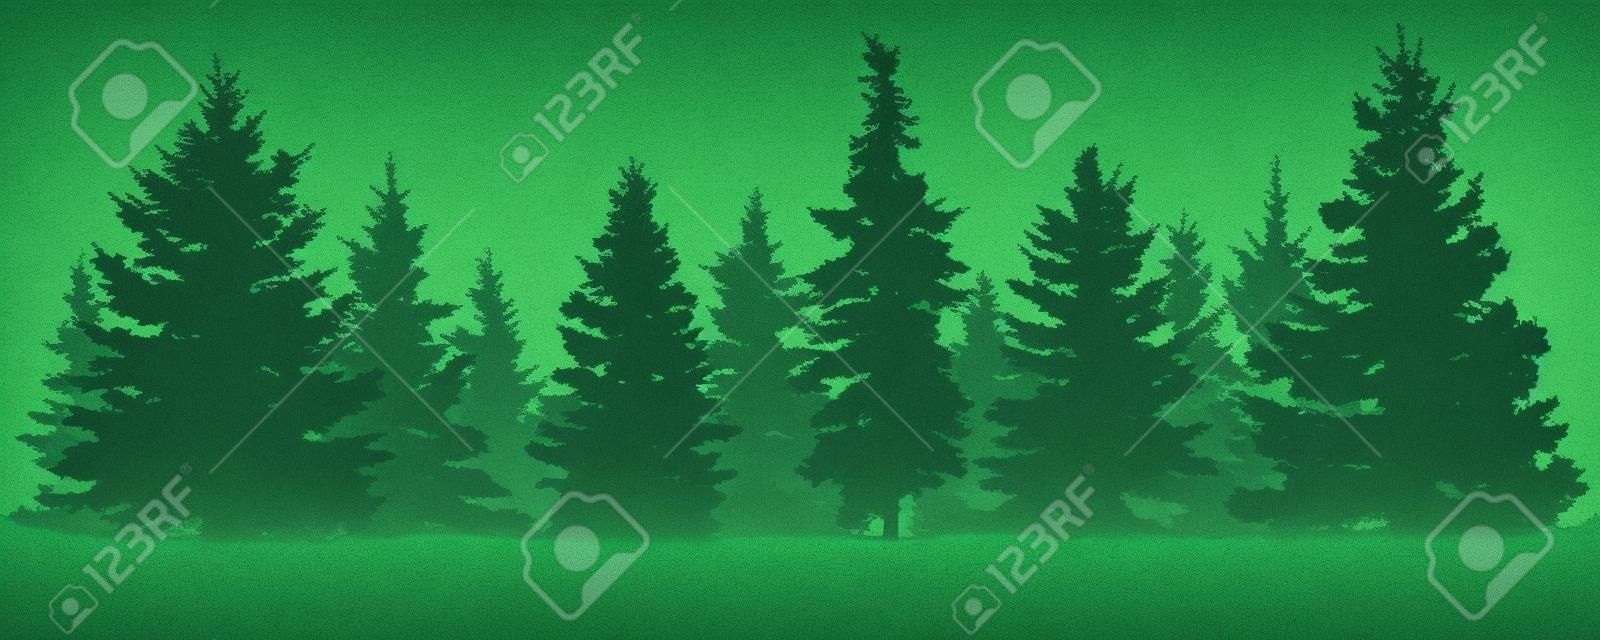 Silhueta de árvores de abeto de floresta. Abeto verde conífera. Vector no fundo branco